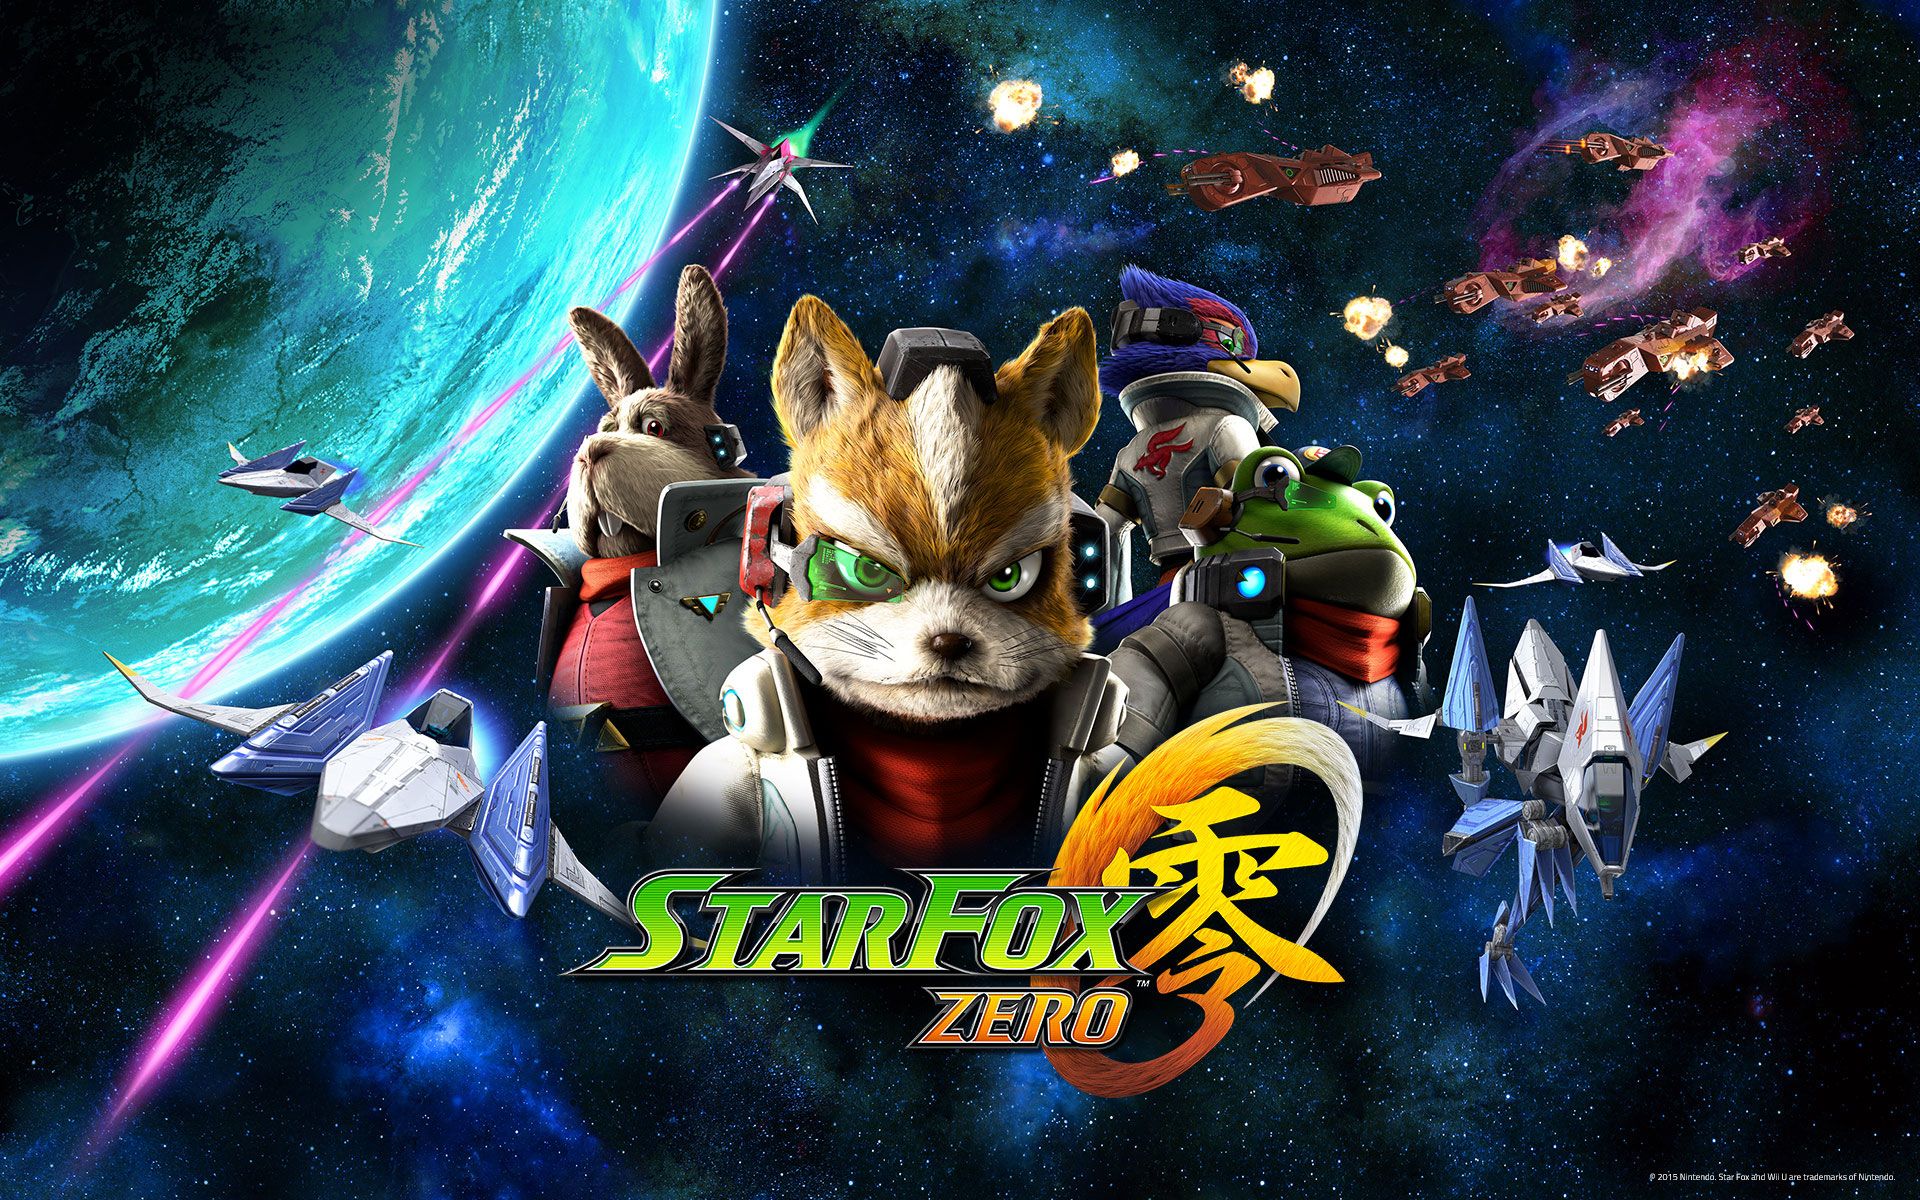 Star Fox Zero for Wii U - Official Site